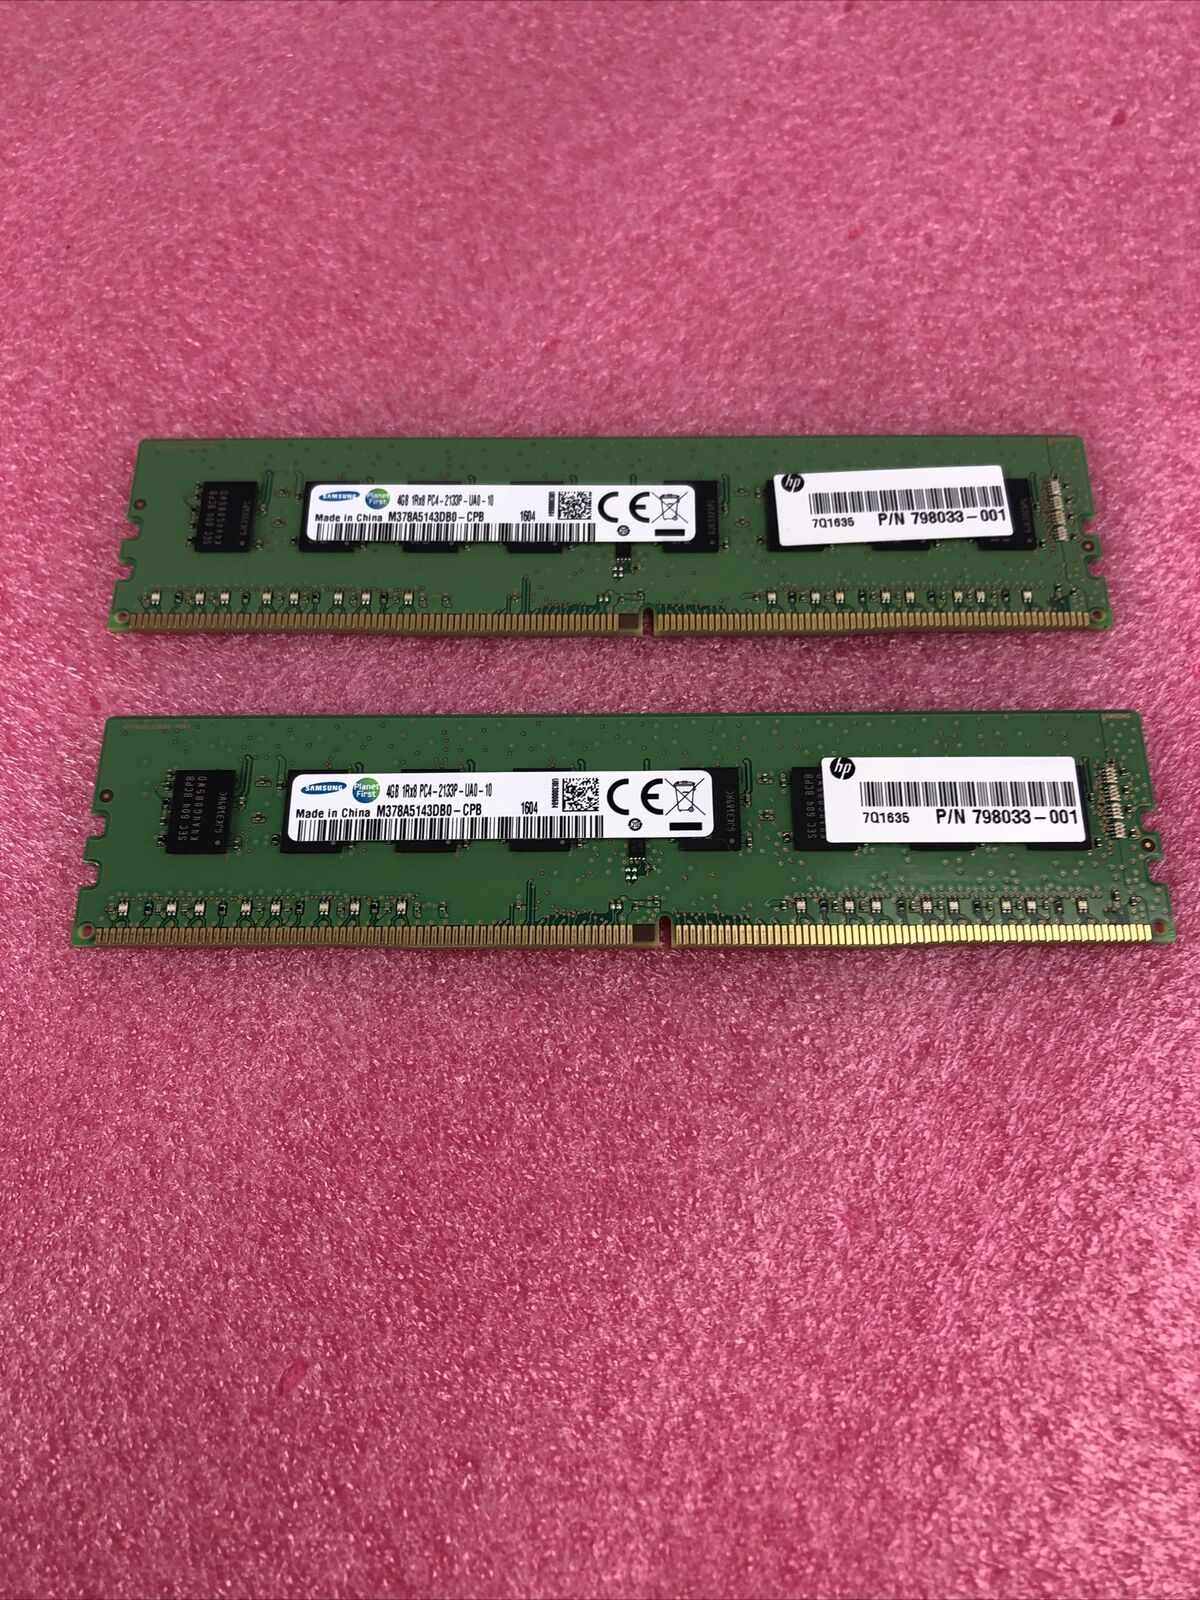 (lot of 2) HP 798033-001 SAMSUNG M378A5143DB0 4GB RAM DDR4 2133MHz